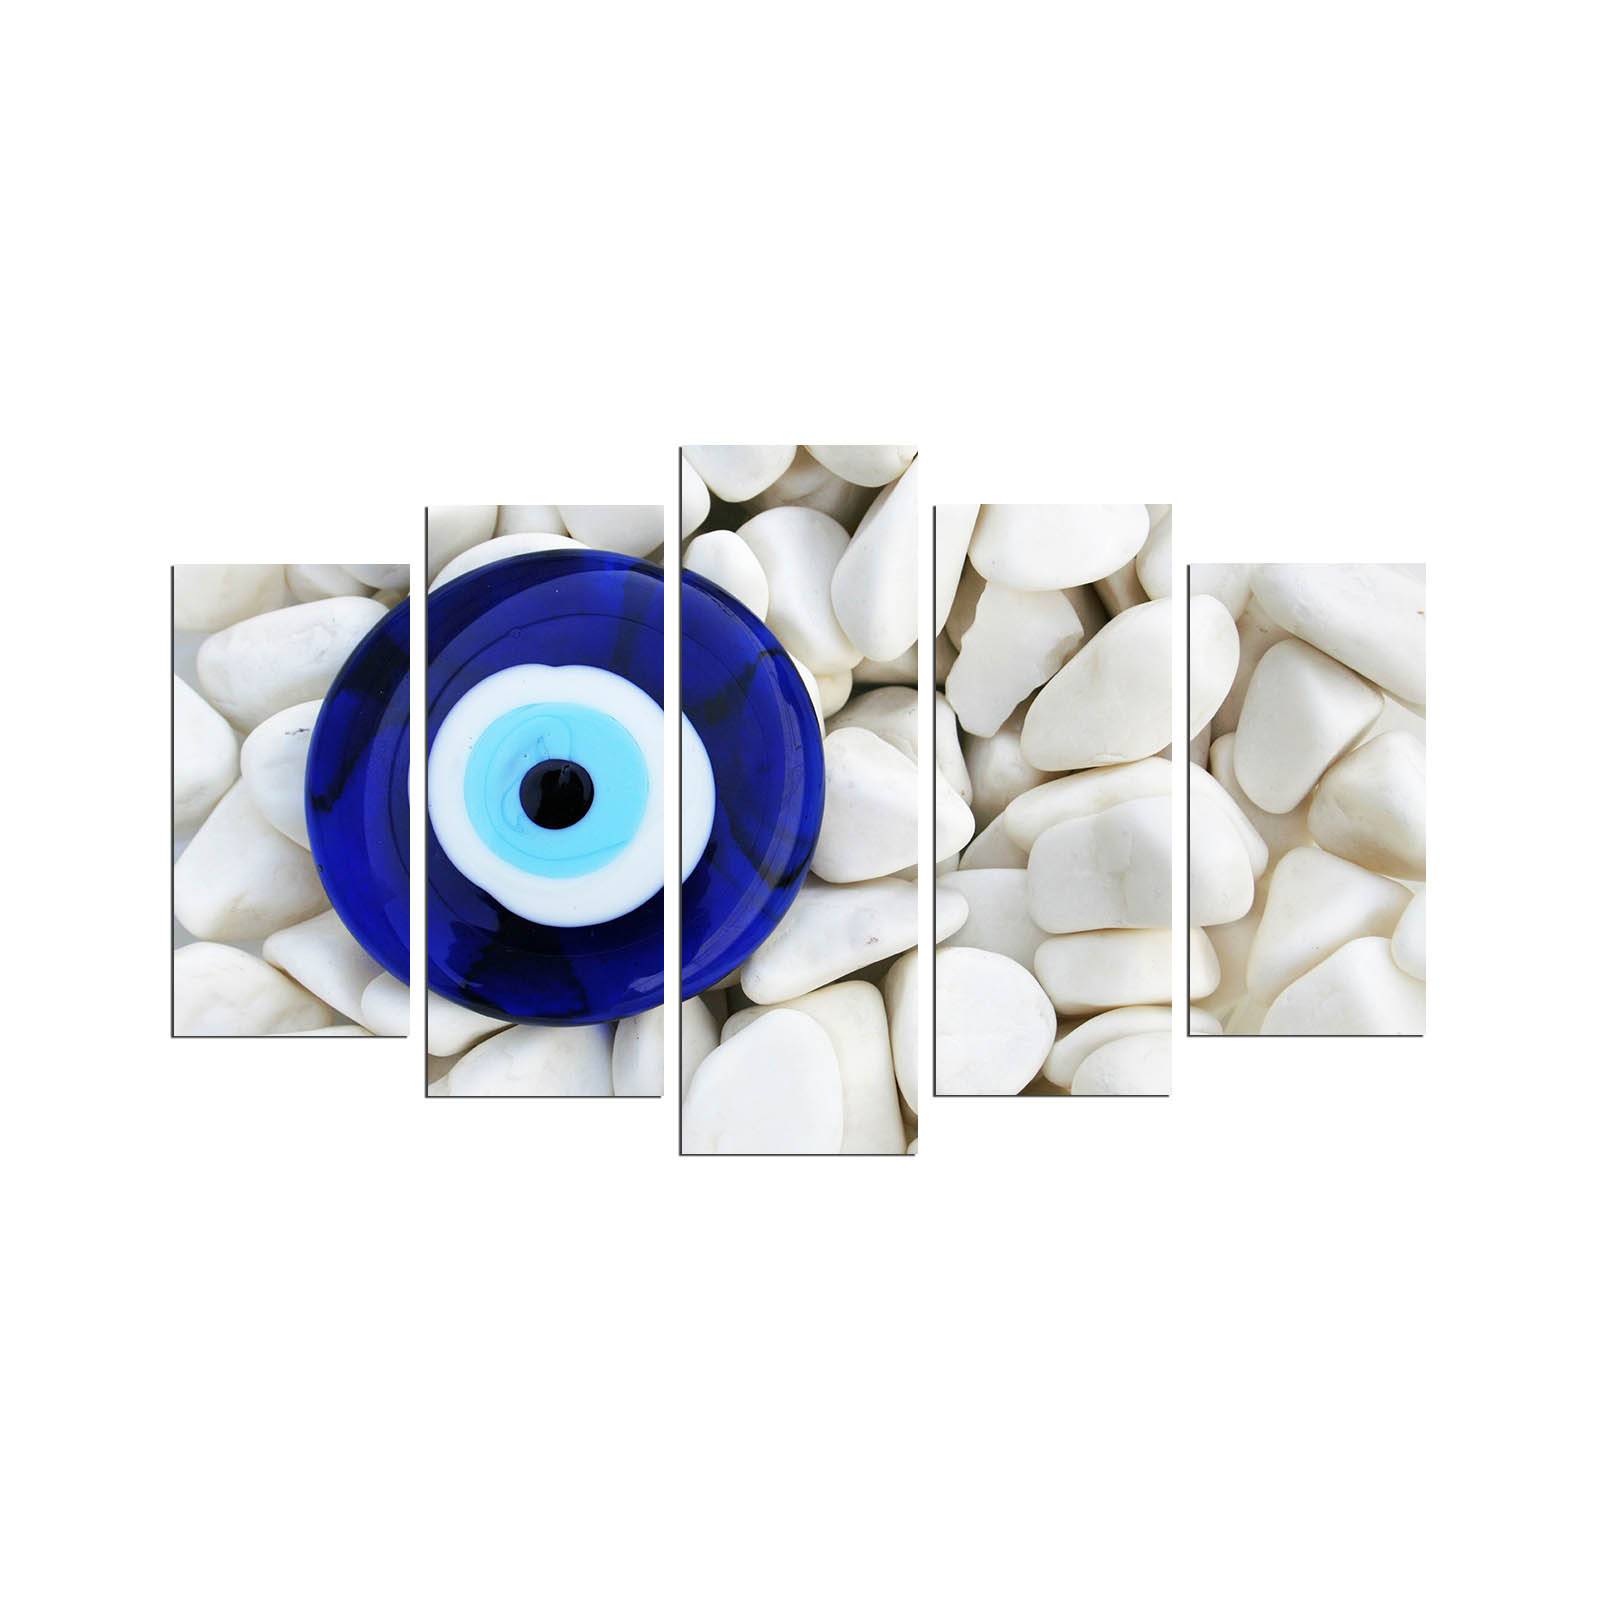 Pentittico Grex Gravel Pattern Occhio blu turco